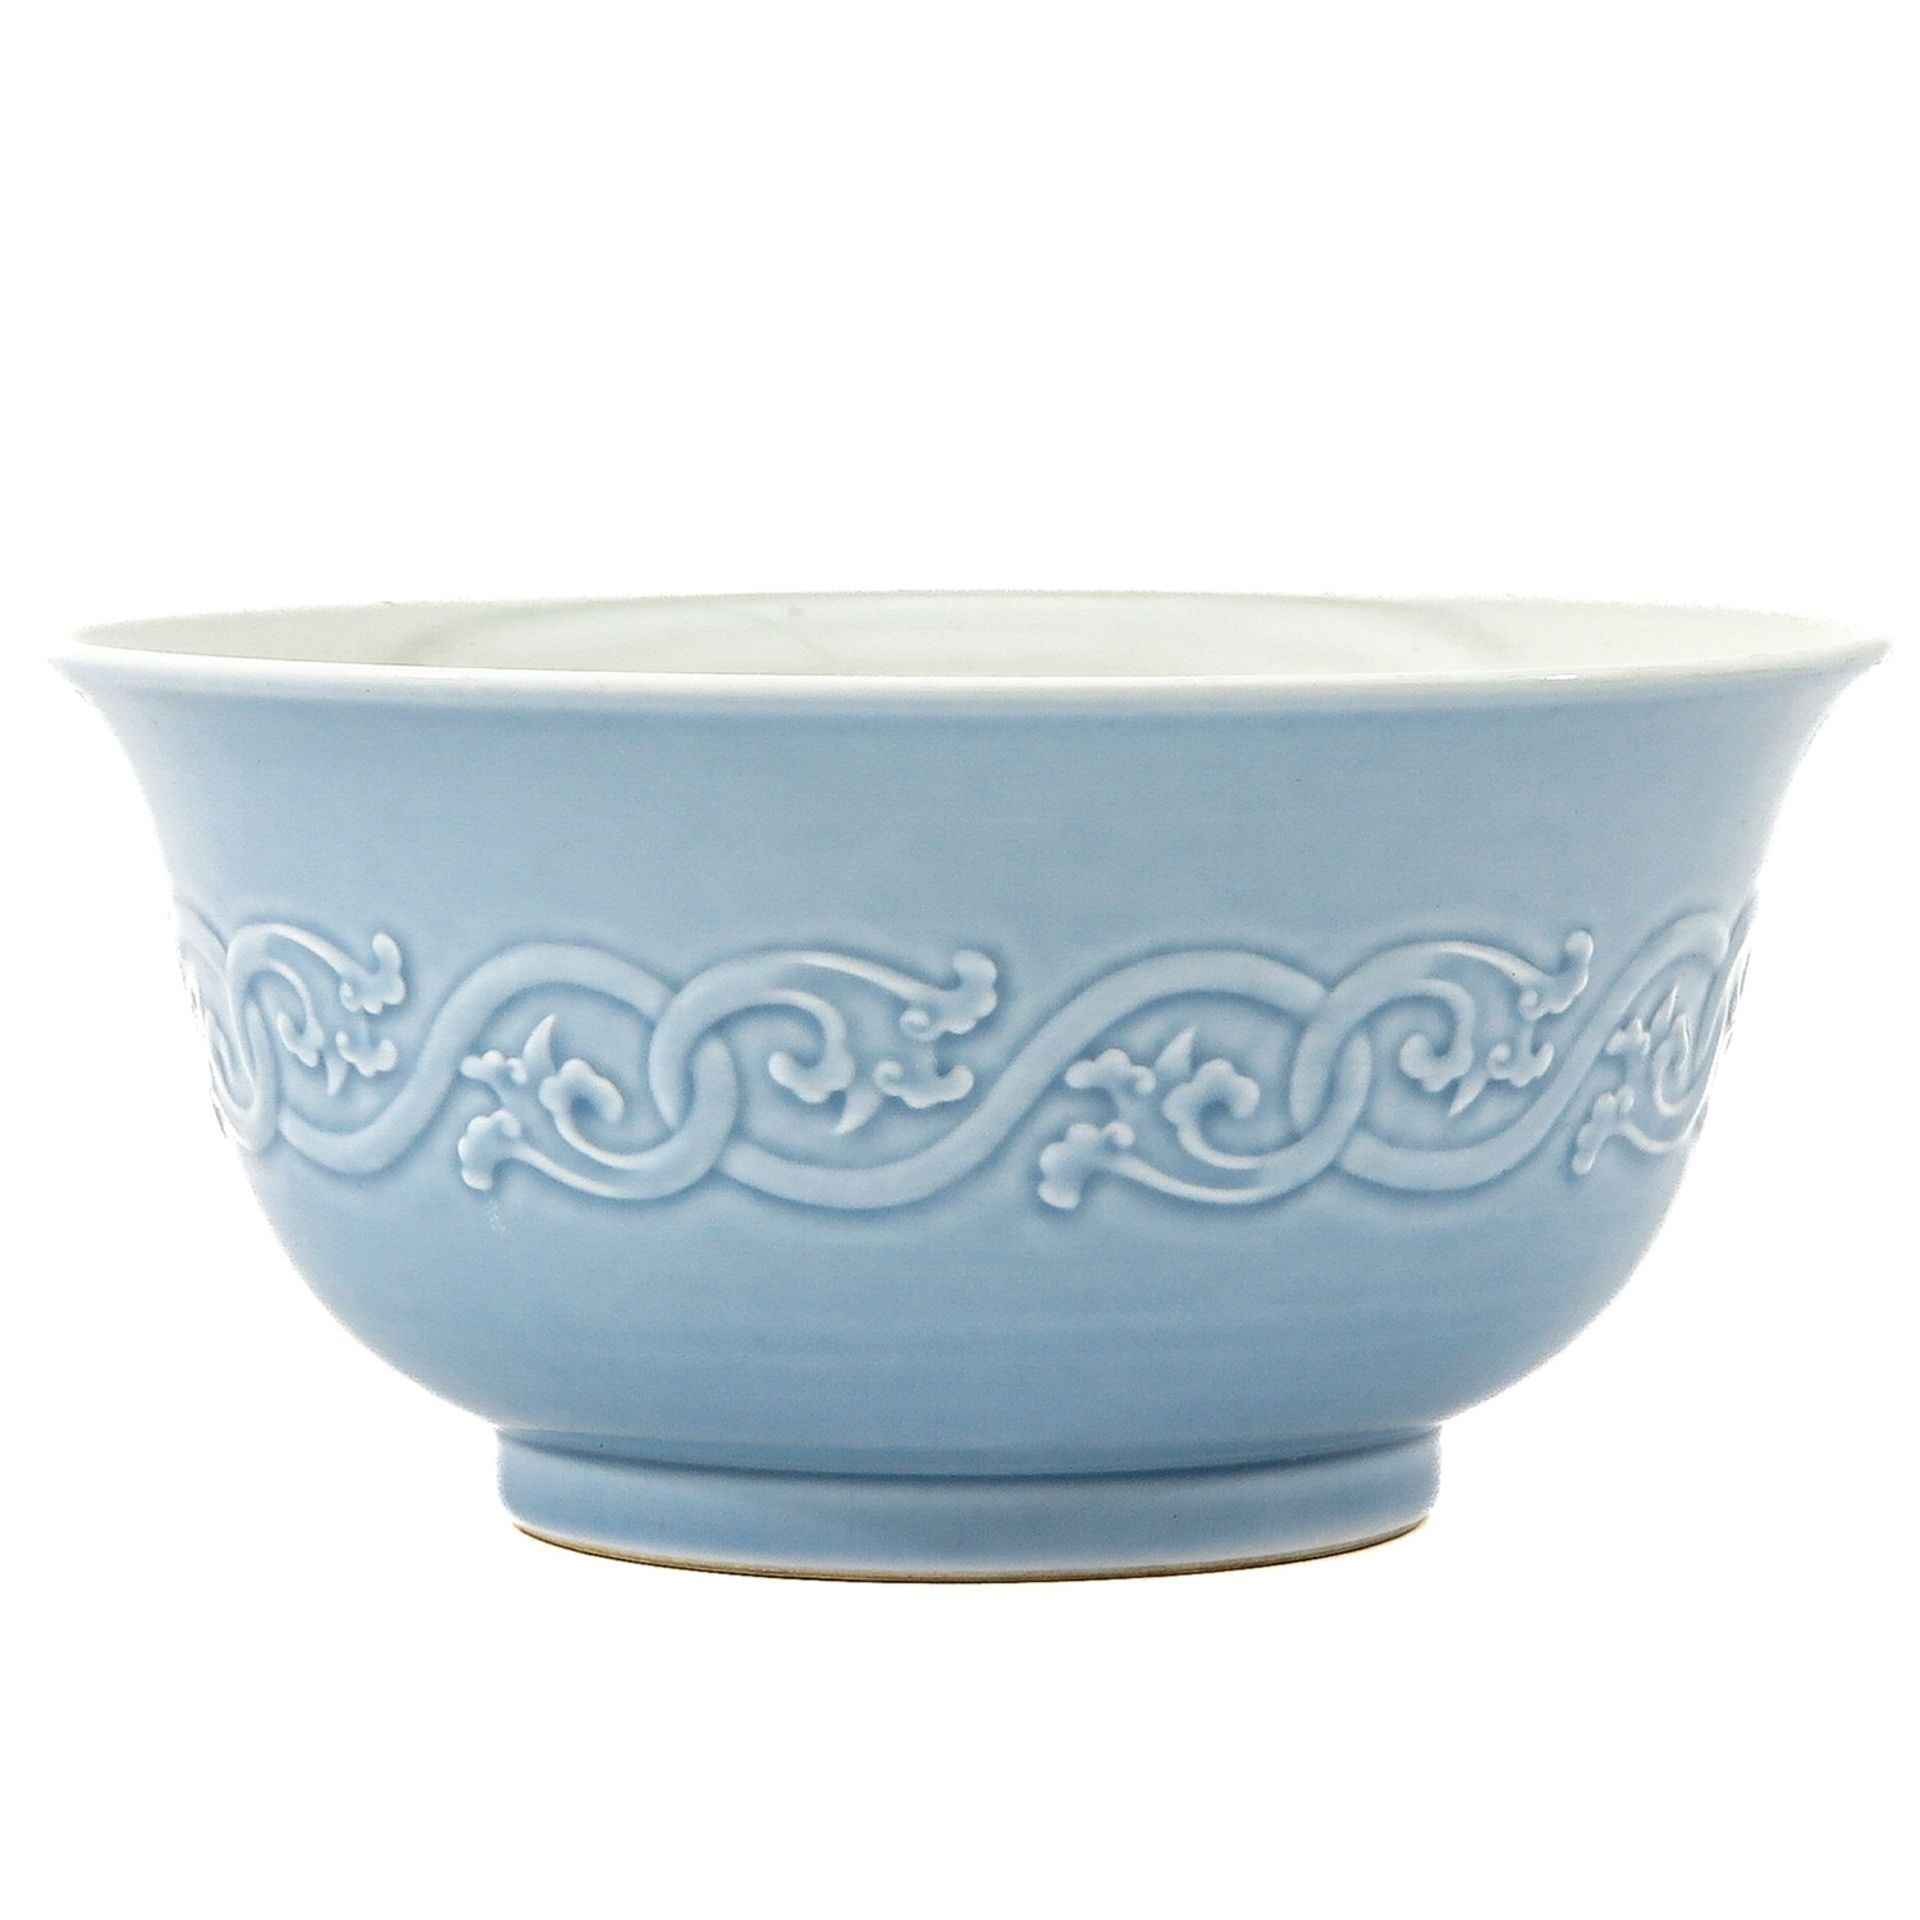 A Blue Glaze Bowl